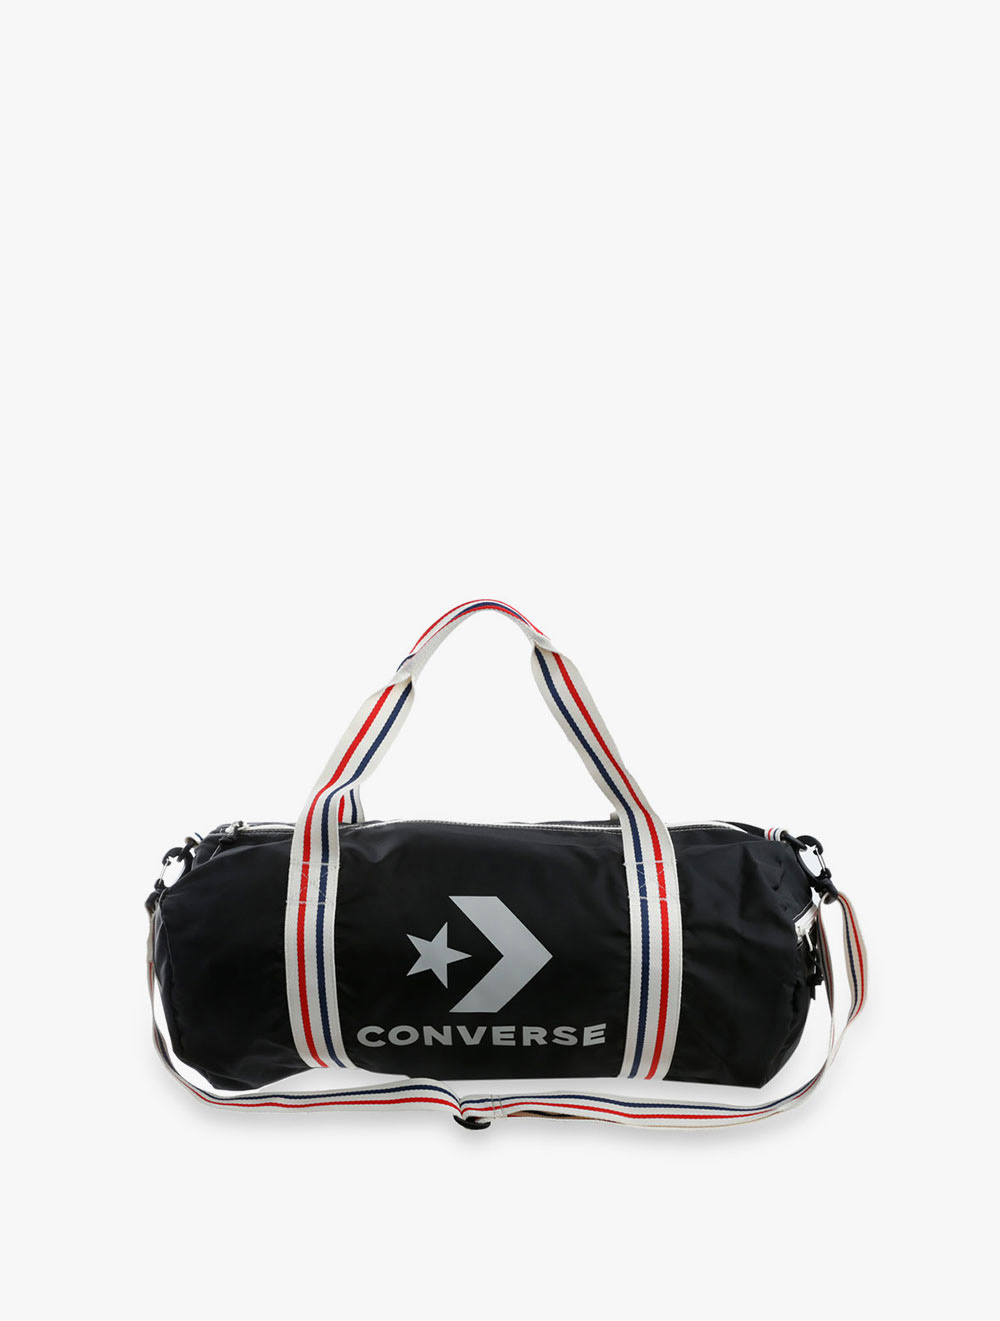 black converse duffle bag